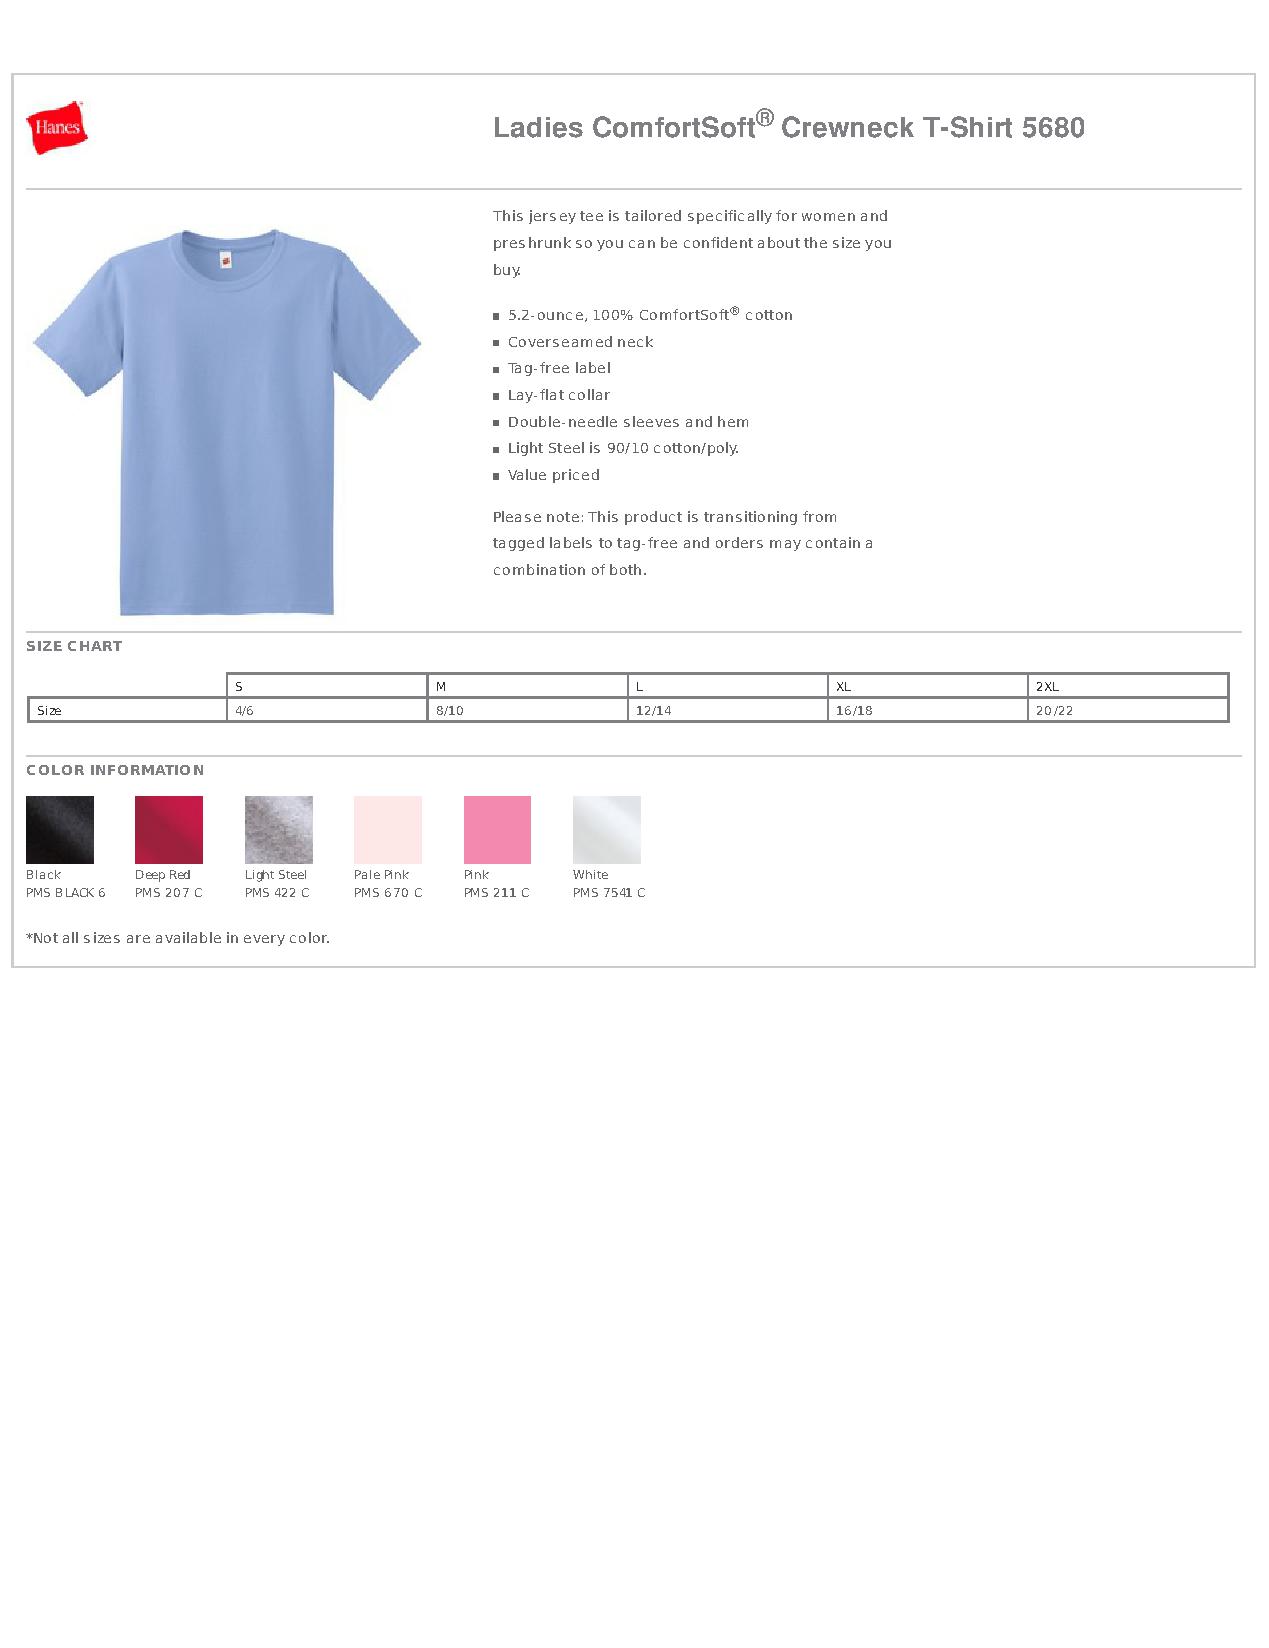 Hanes Large T Shirt Size Chart